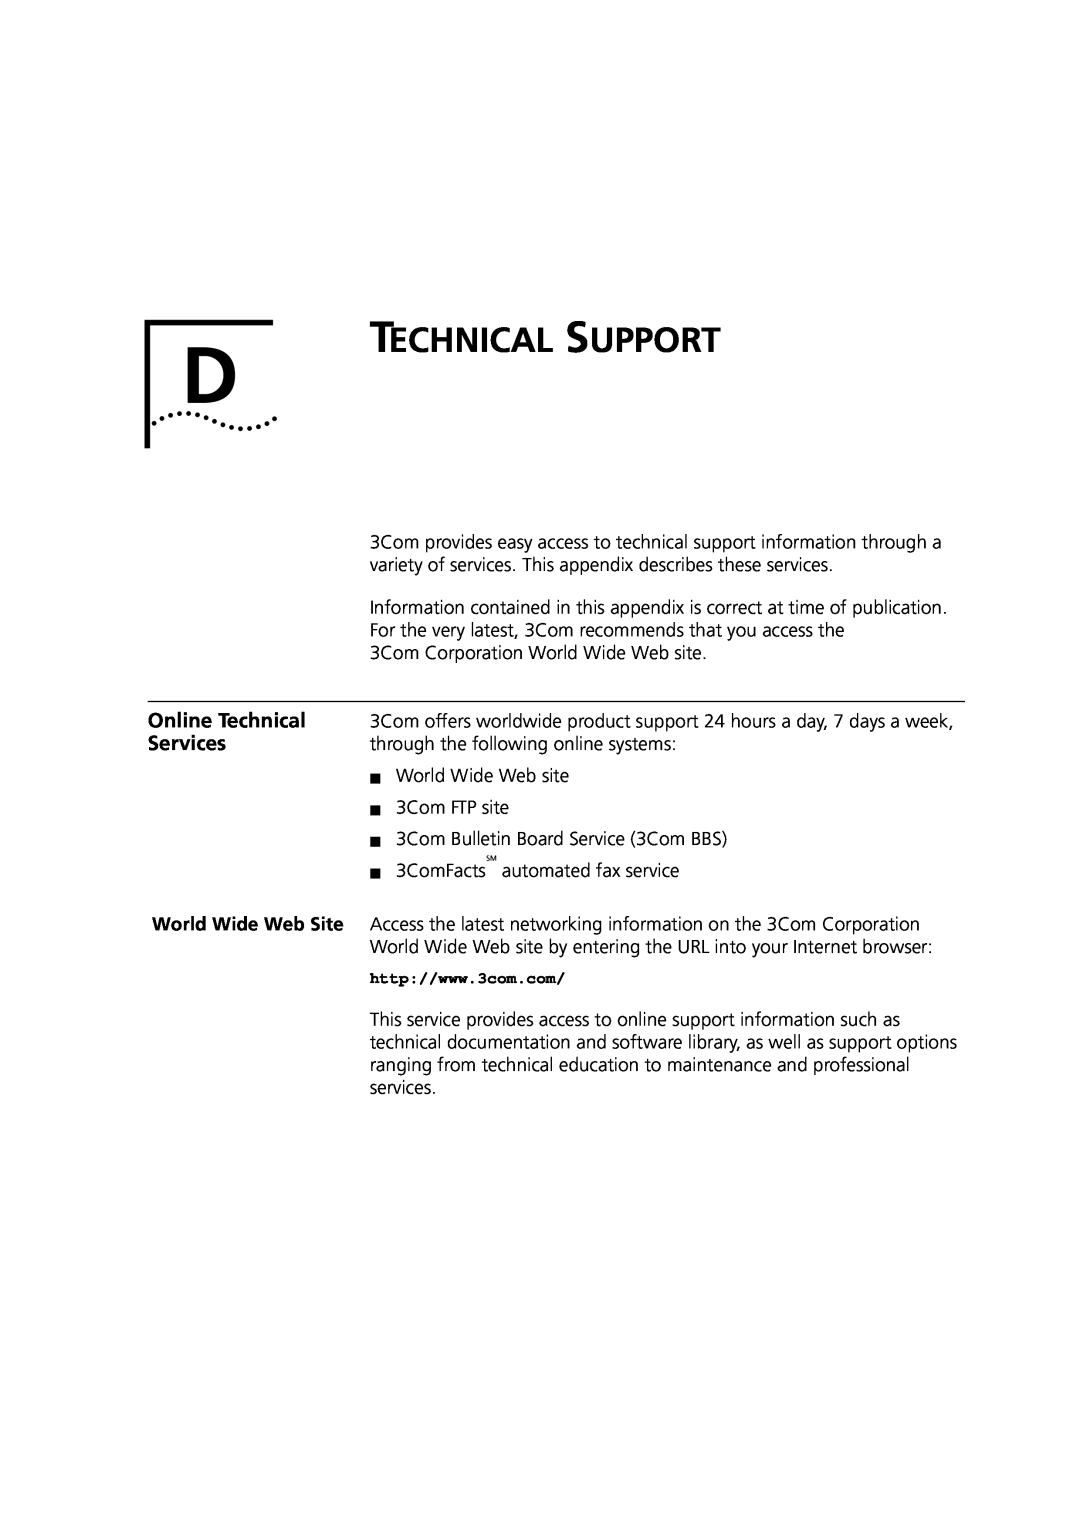 3Com DUA3700-0BAA04 manual Technical Support, Online Technical, Services 